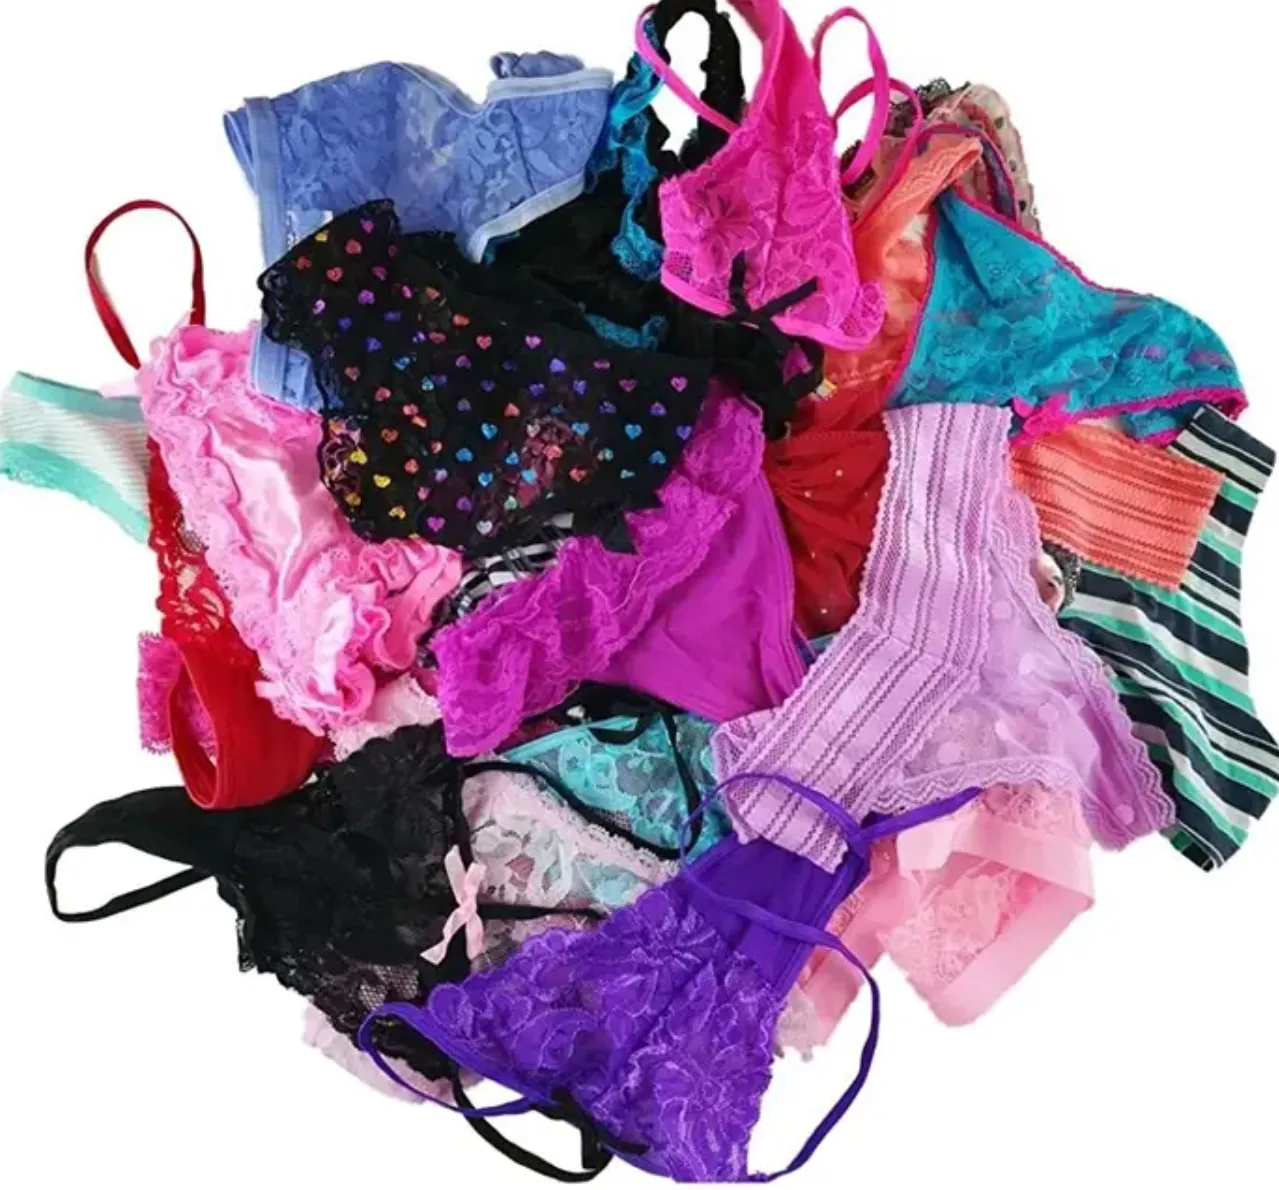 Smart & Sexy Womens Plus Lace Trim Thong Panty 4-pack  Black/leopard/black/electric Pink Xxl : Target